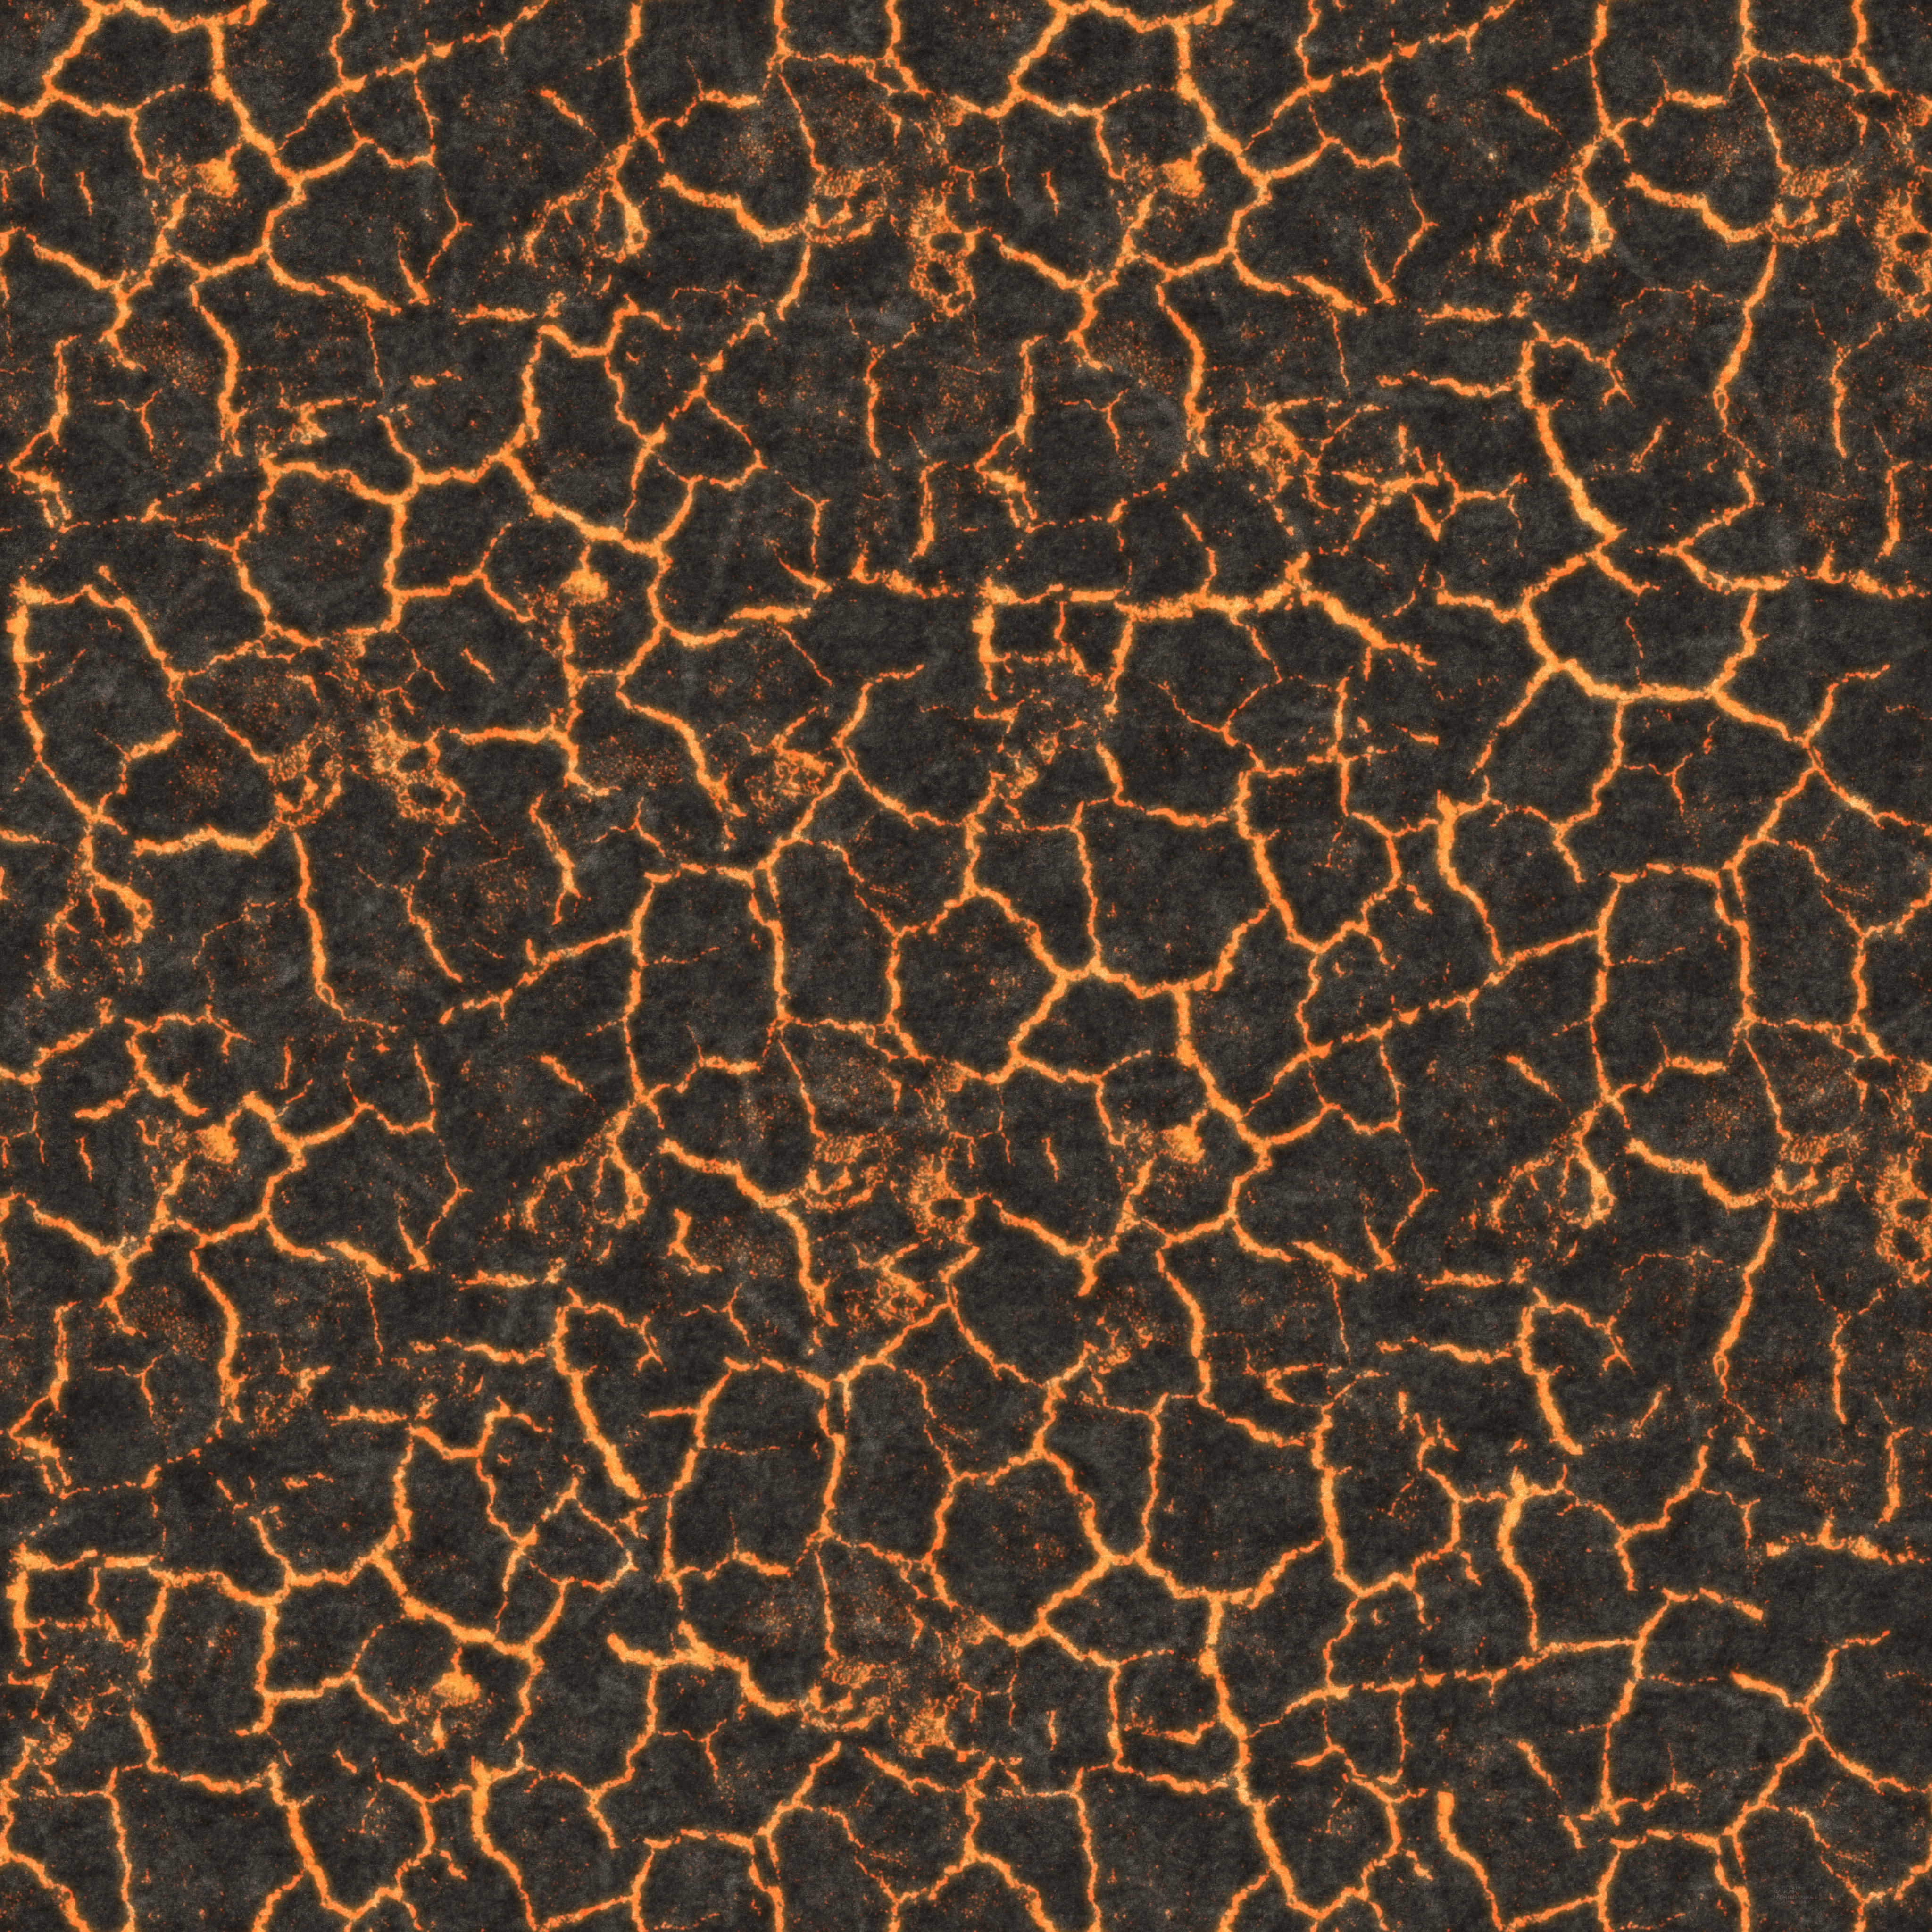 Texture Lava Rock 4k By Reconditearcana